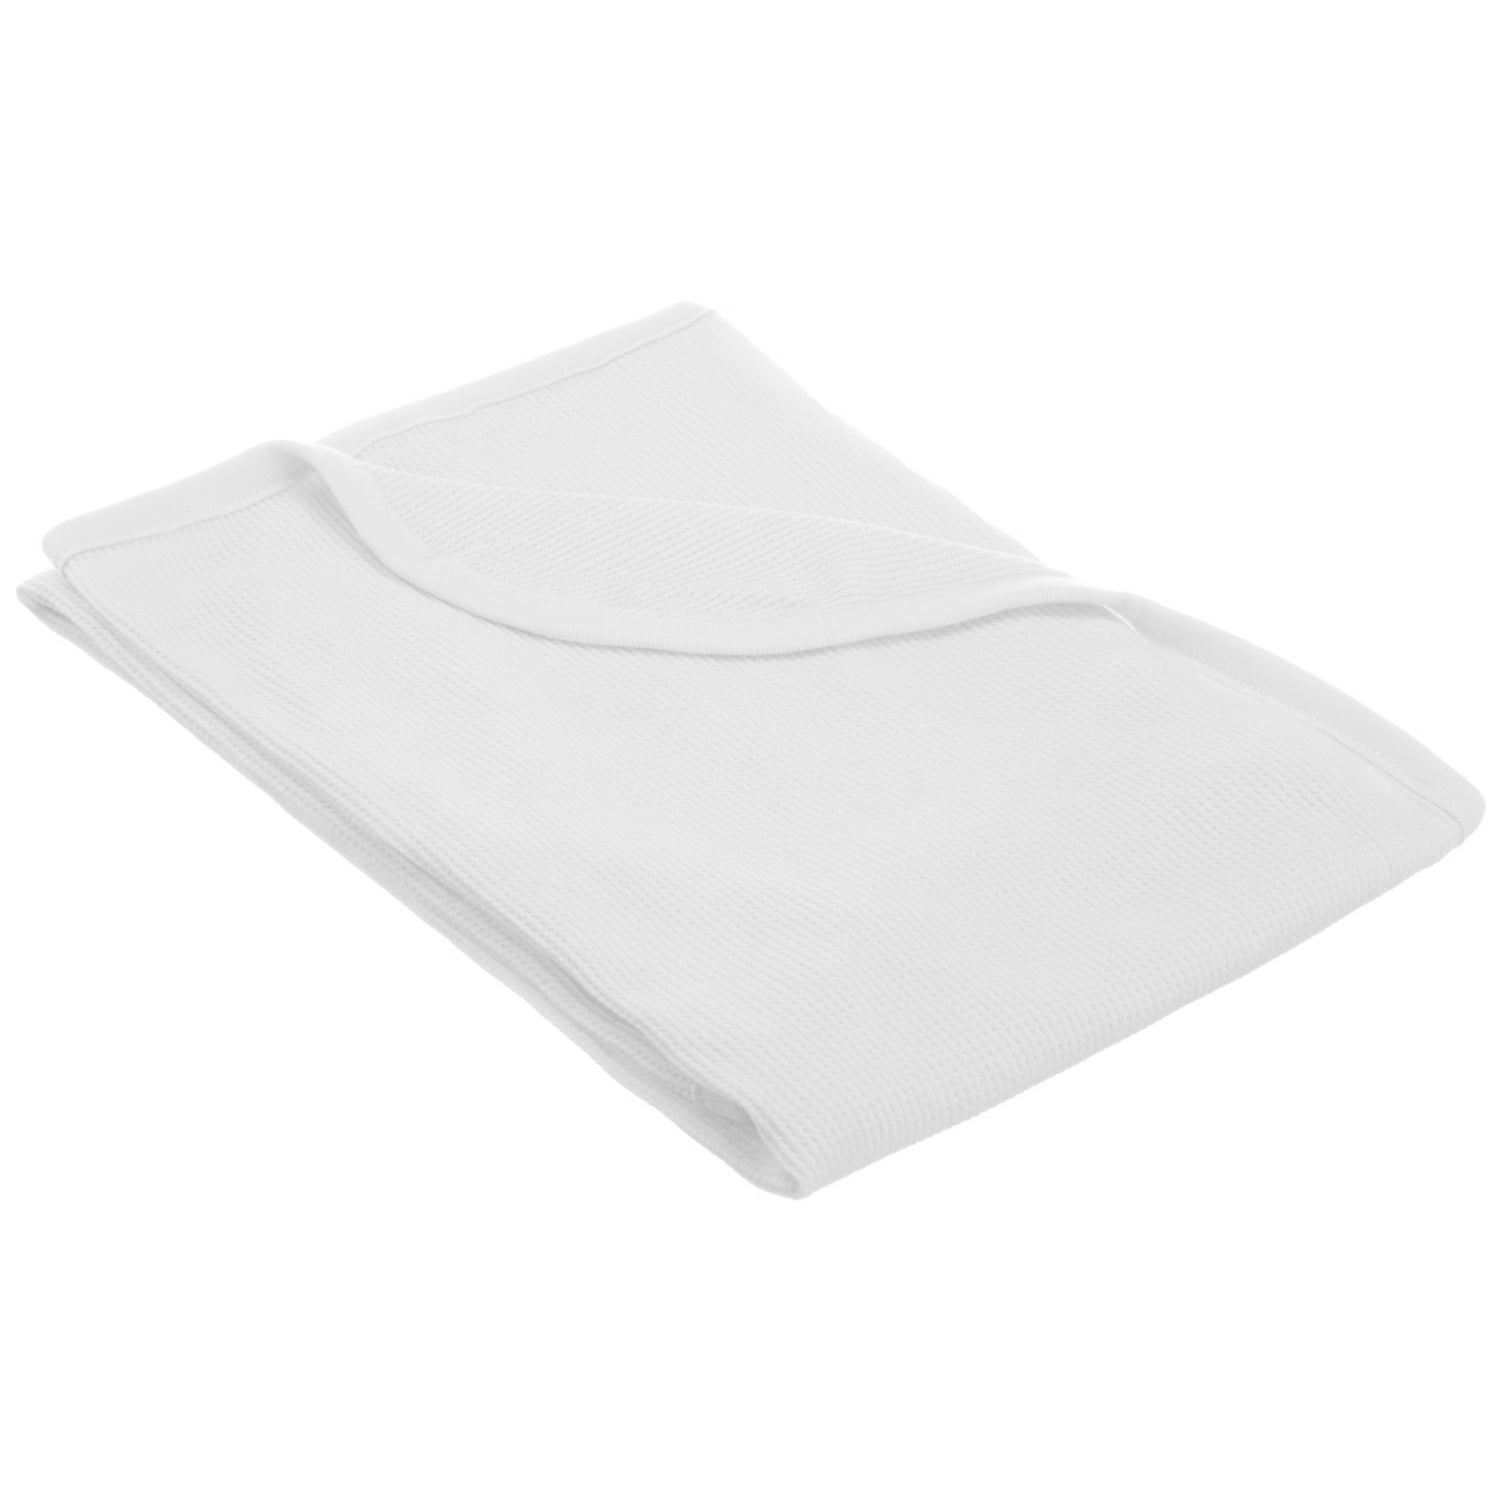 Make Market Sublimation Baby Blanket - White - 30 x 40 in